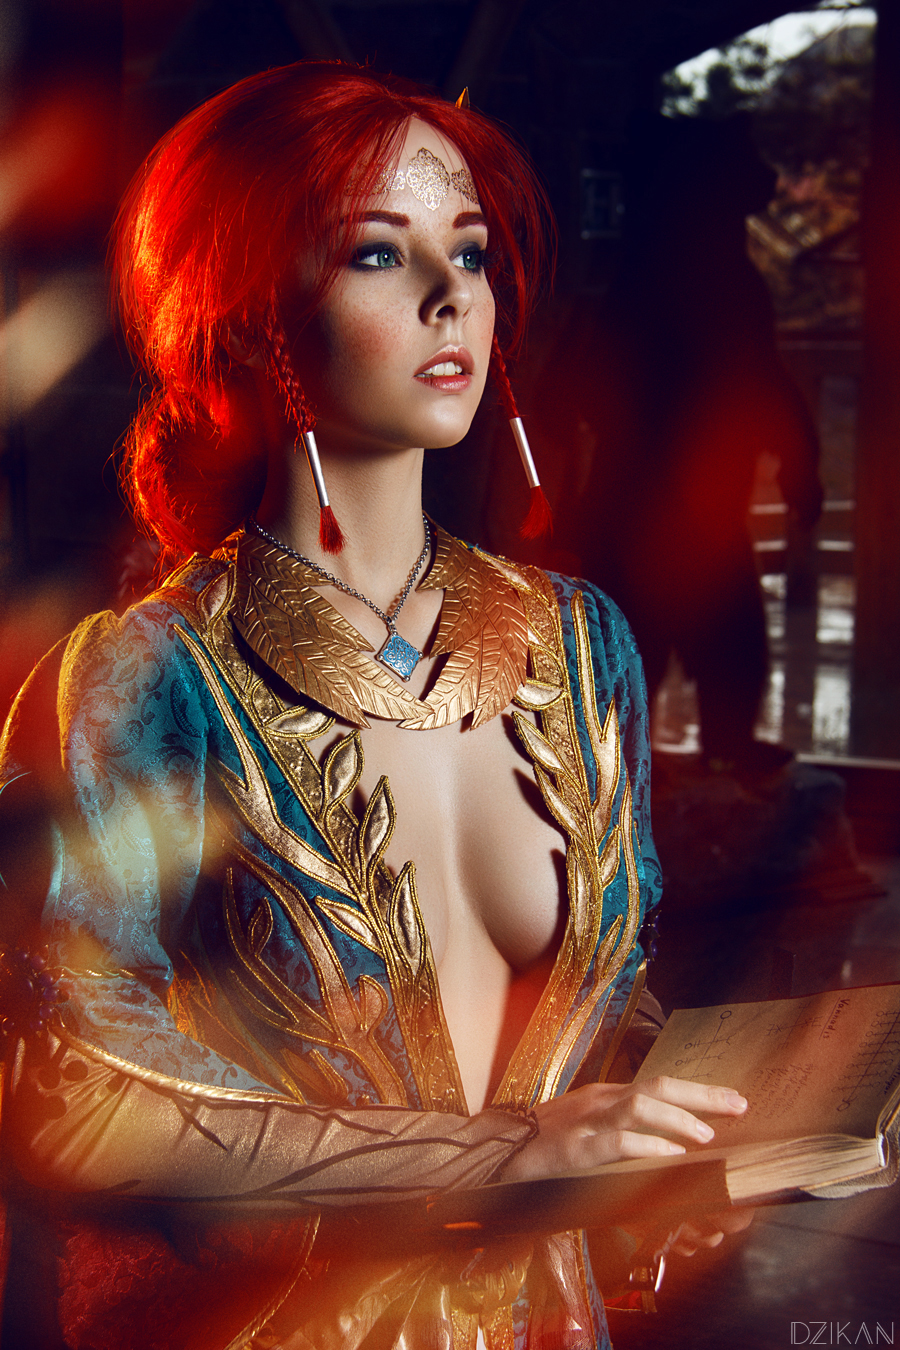 Triss merigold sexy cosplay